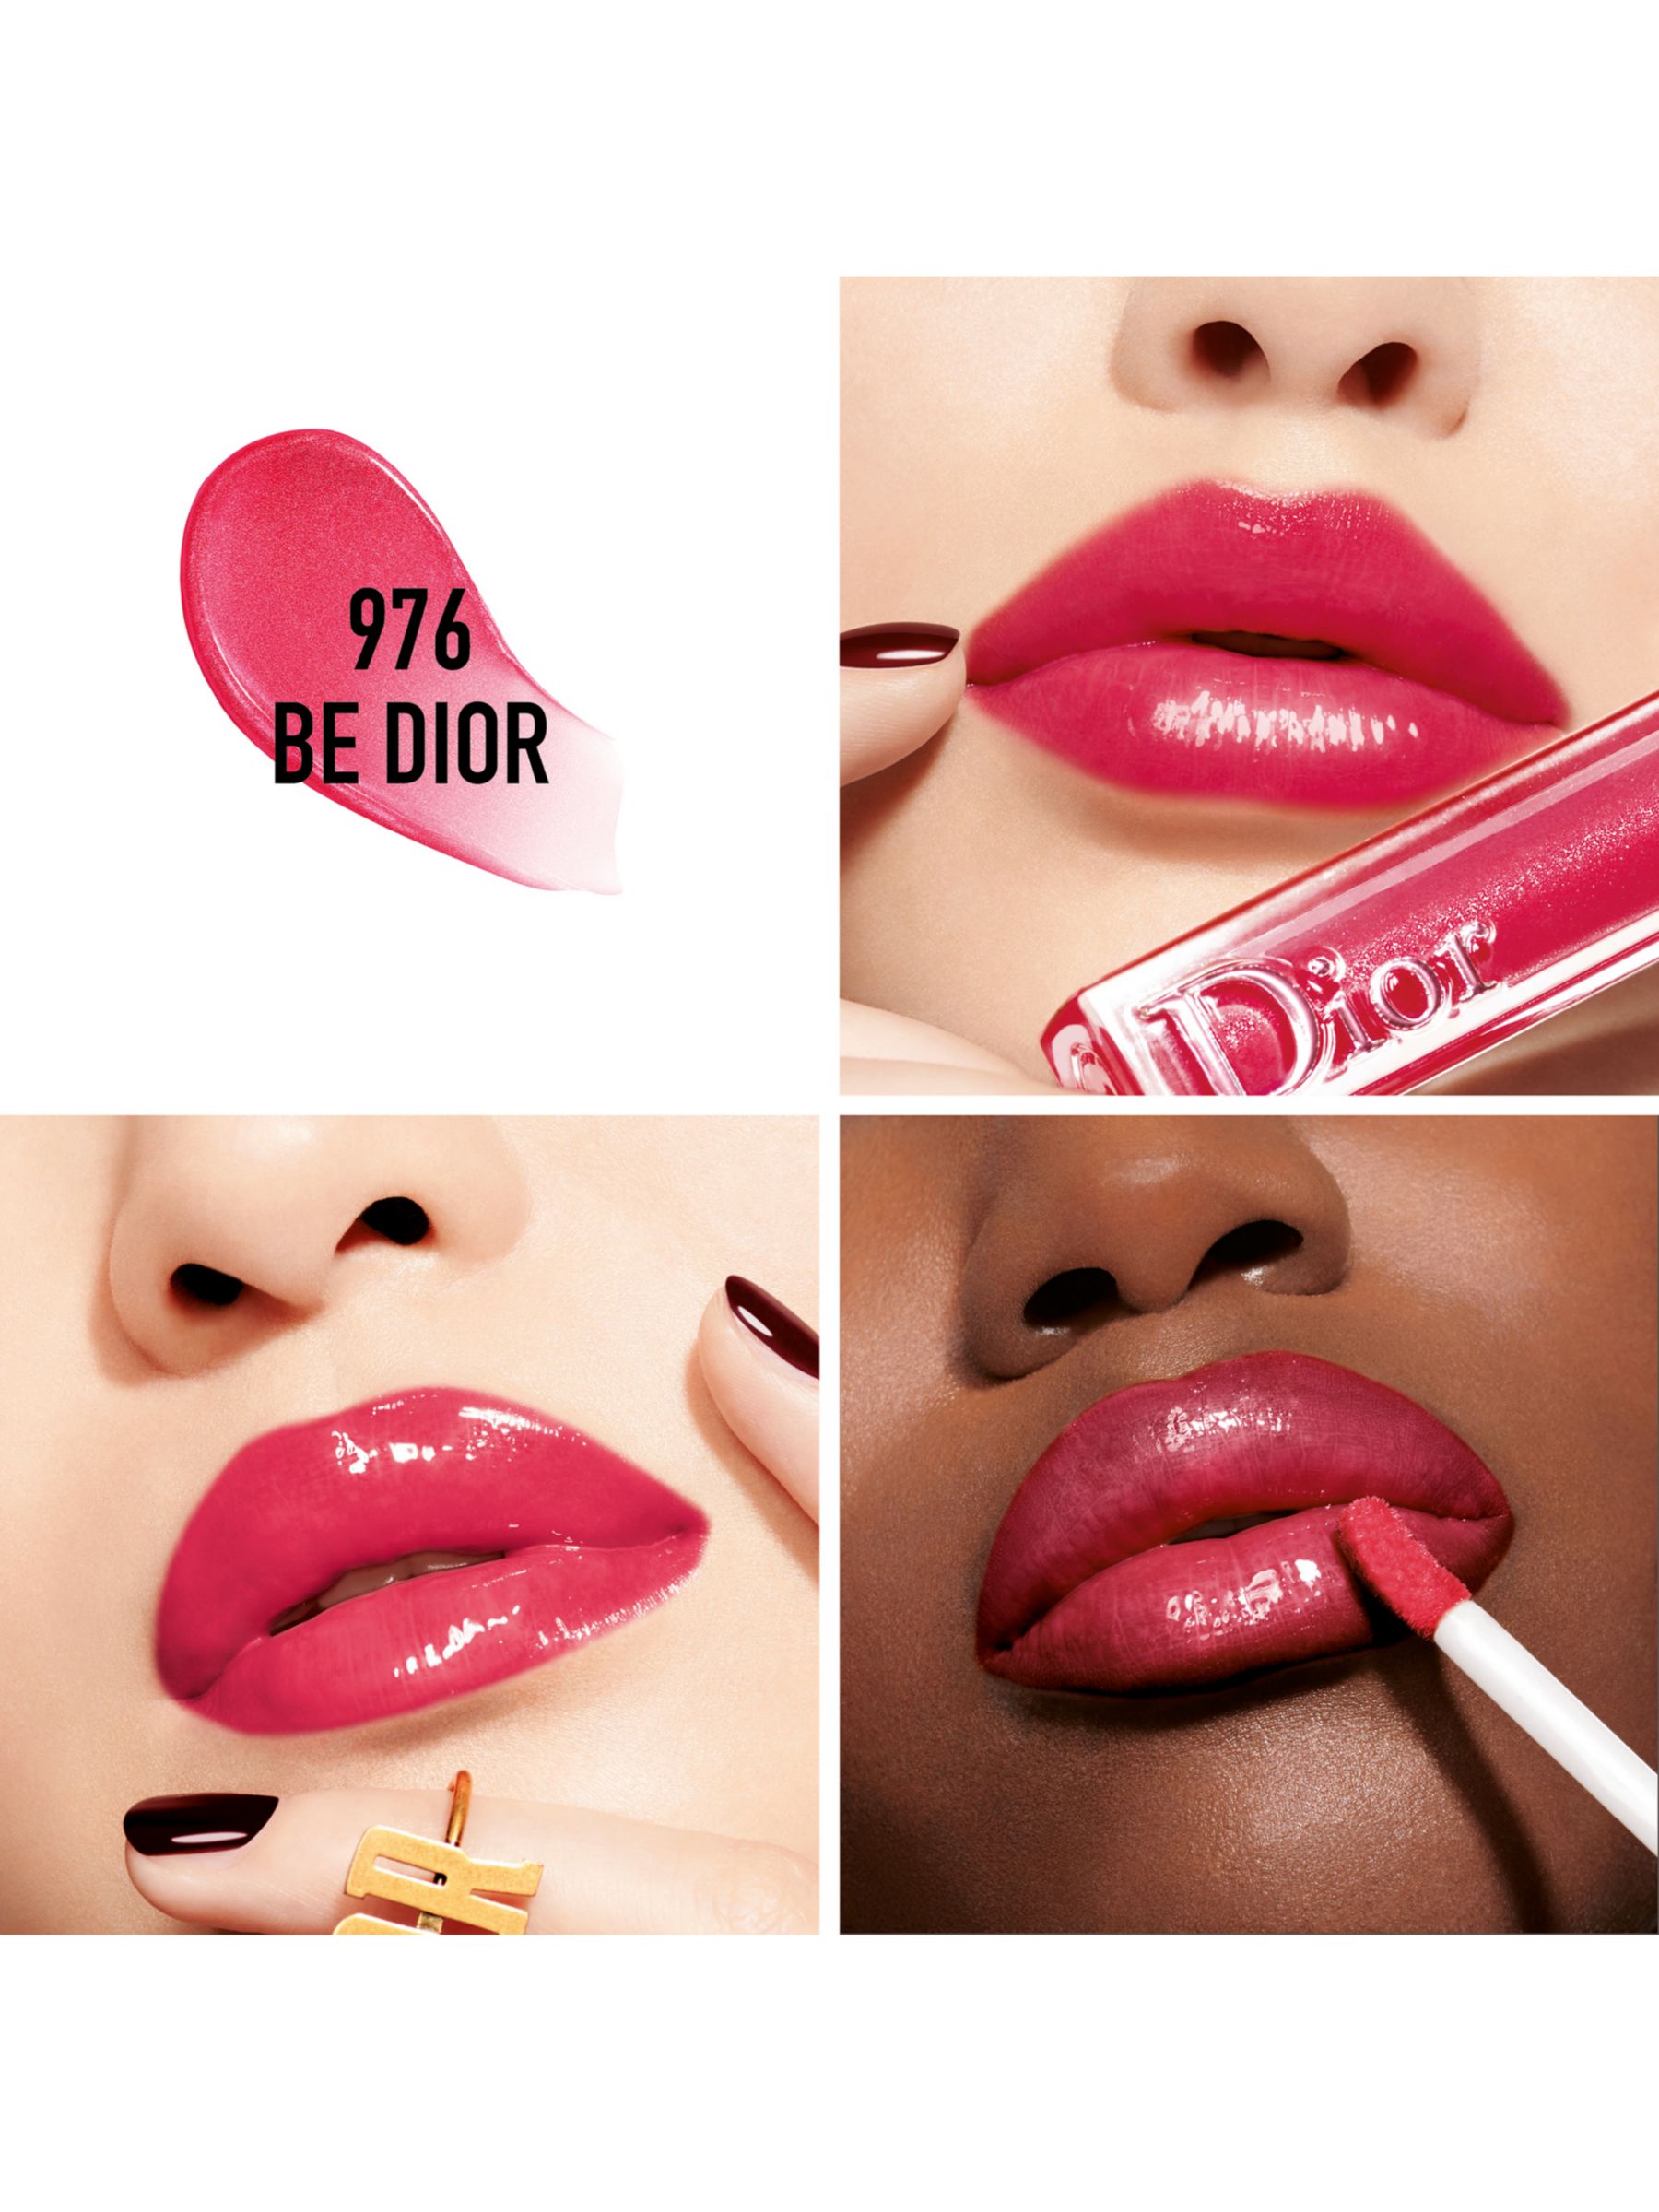 dior 976 lipstick